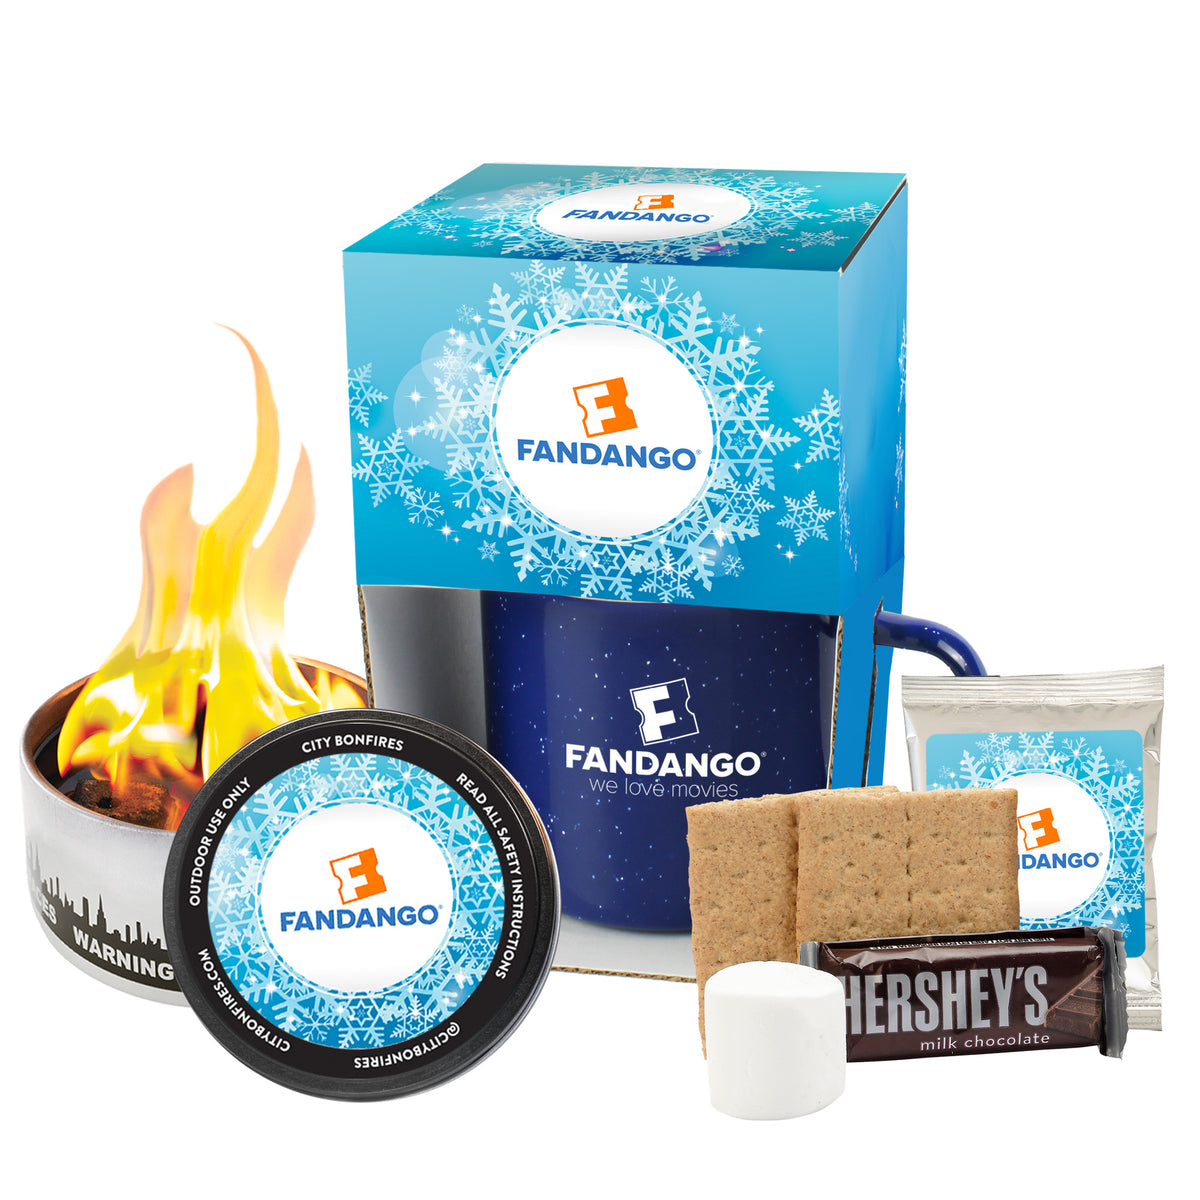 Speckled Camping Mug - 16 oz., City Bonfires® Portable Bonfire, Hot Chocolate Mix, Smores Kit